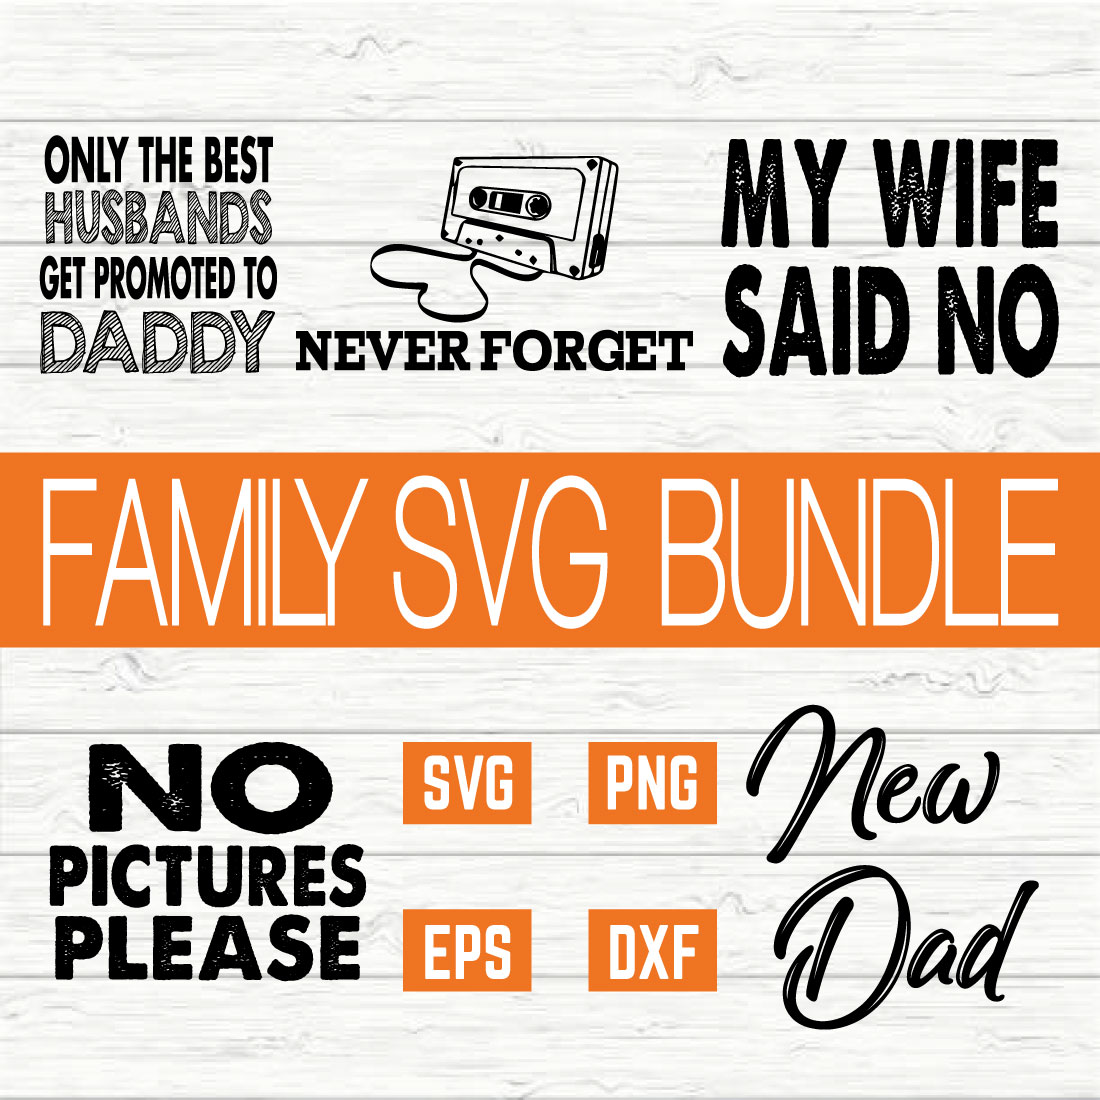 Family Design Bundle vol 22 cover image.